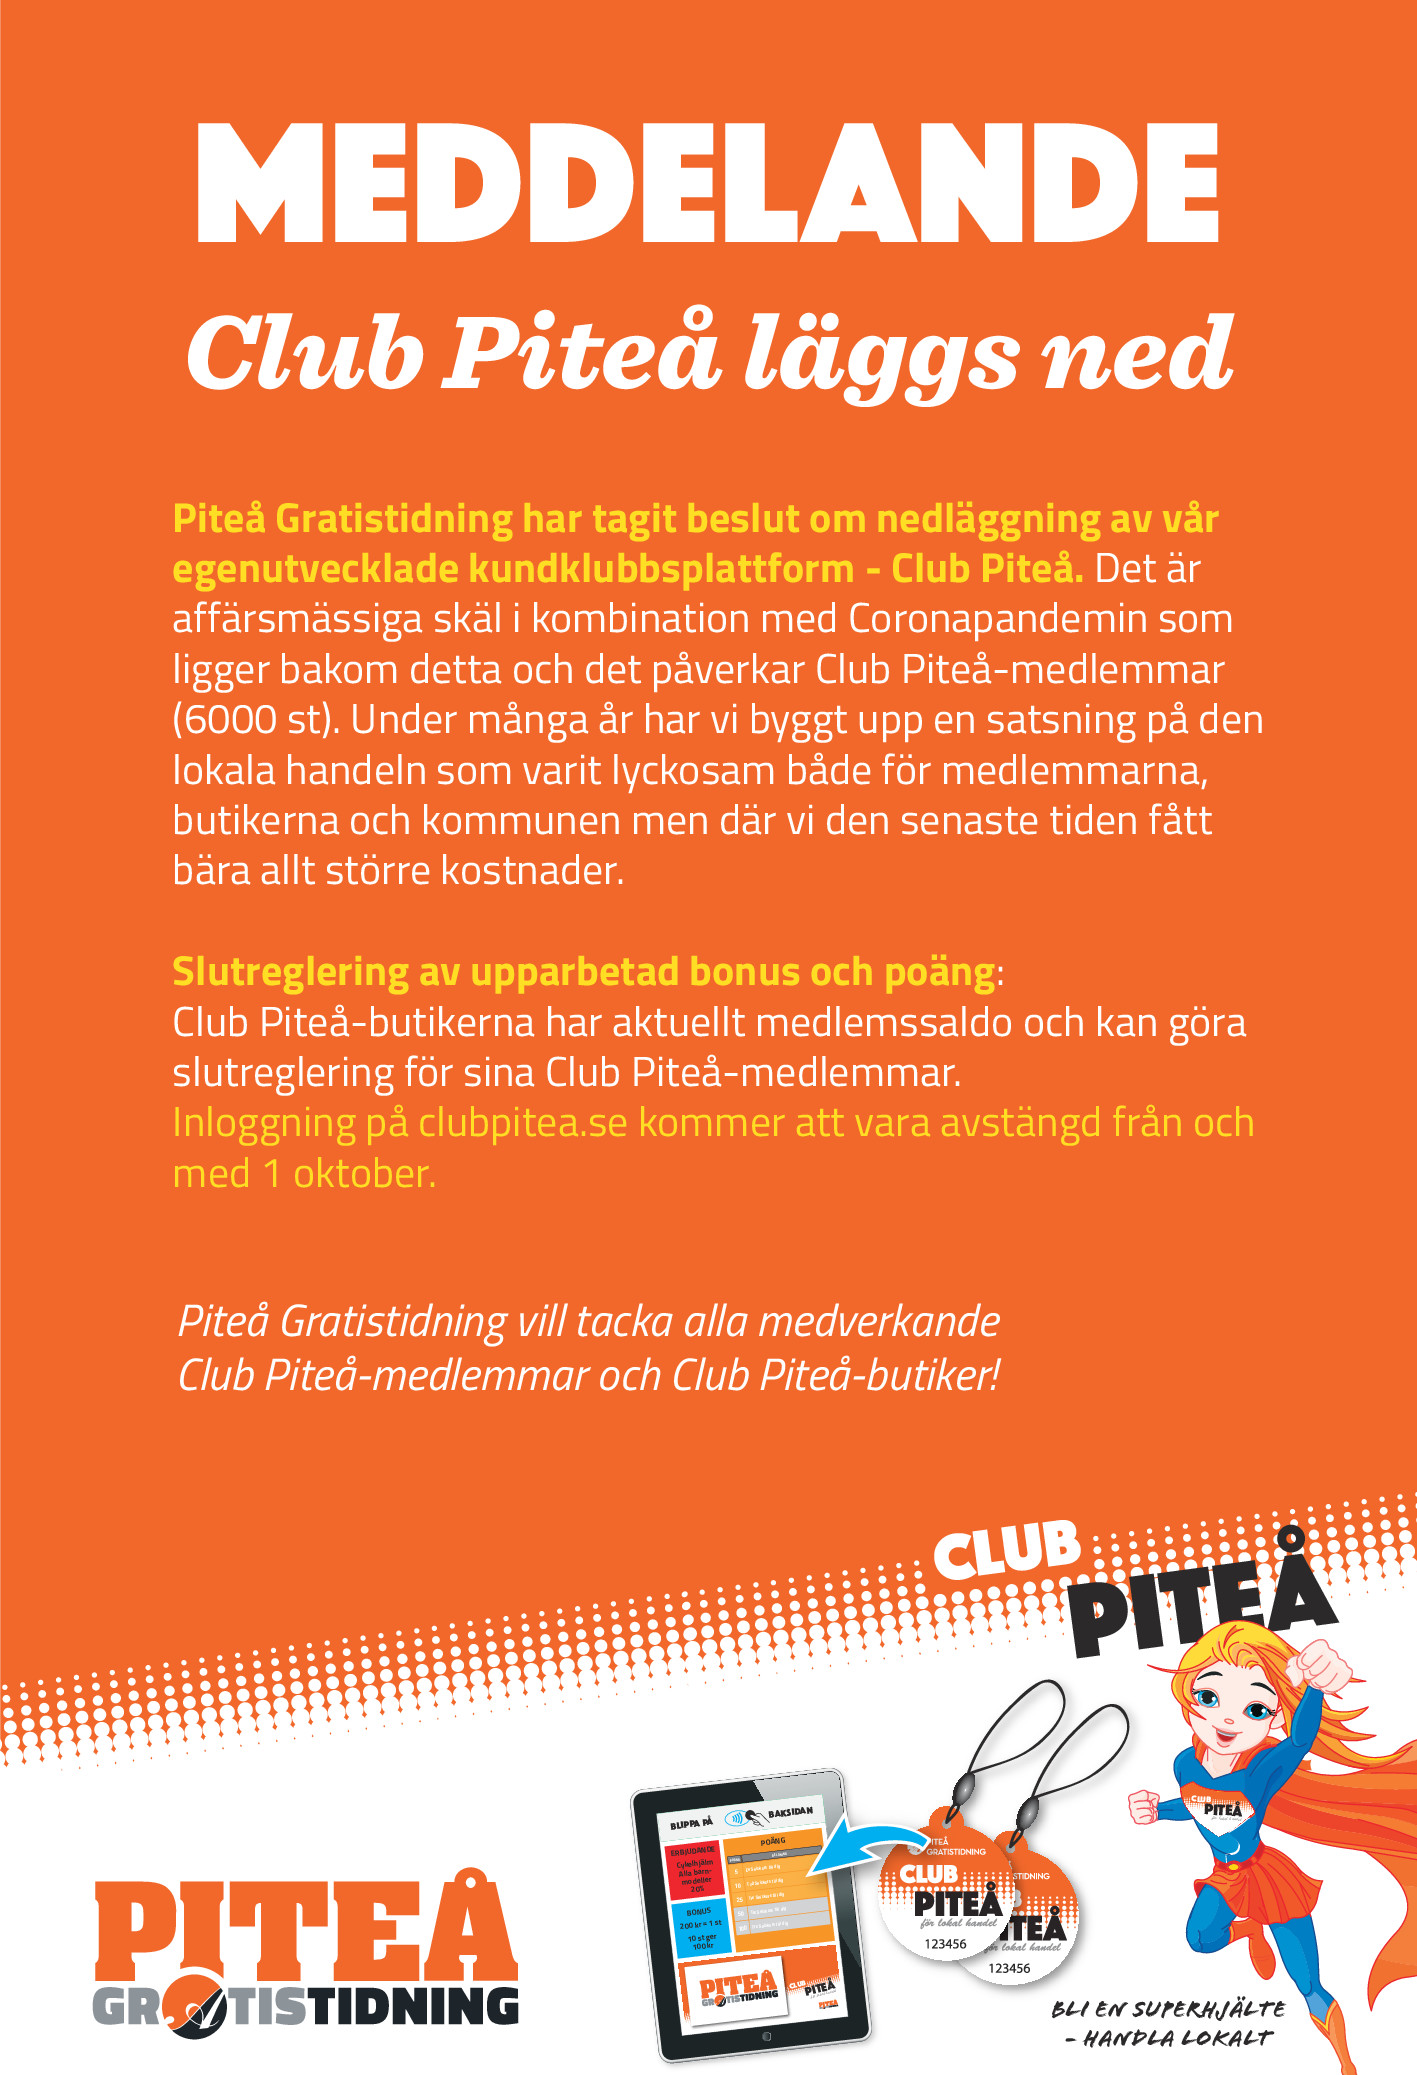 Club Piteå